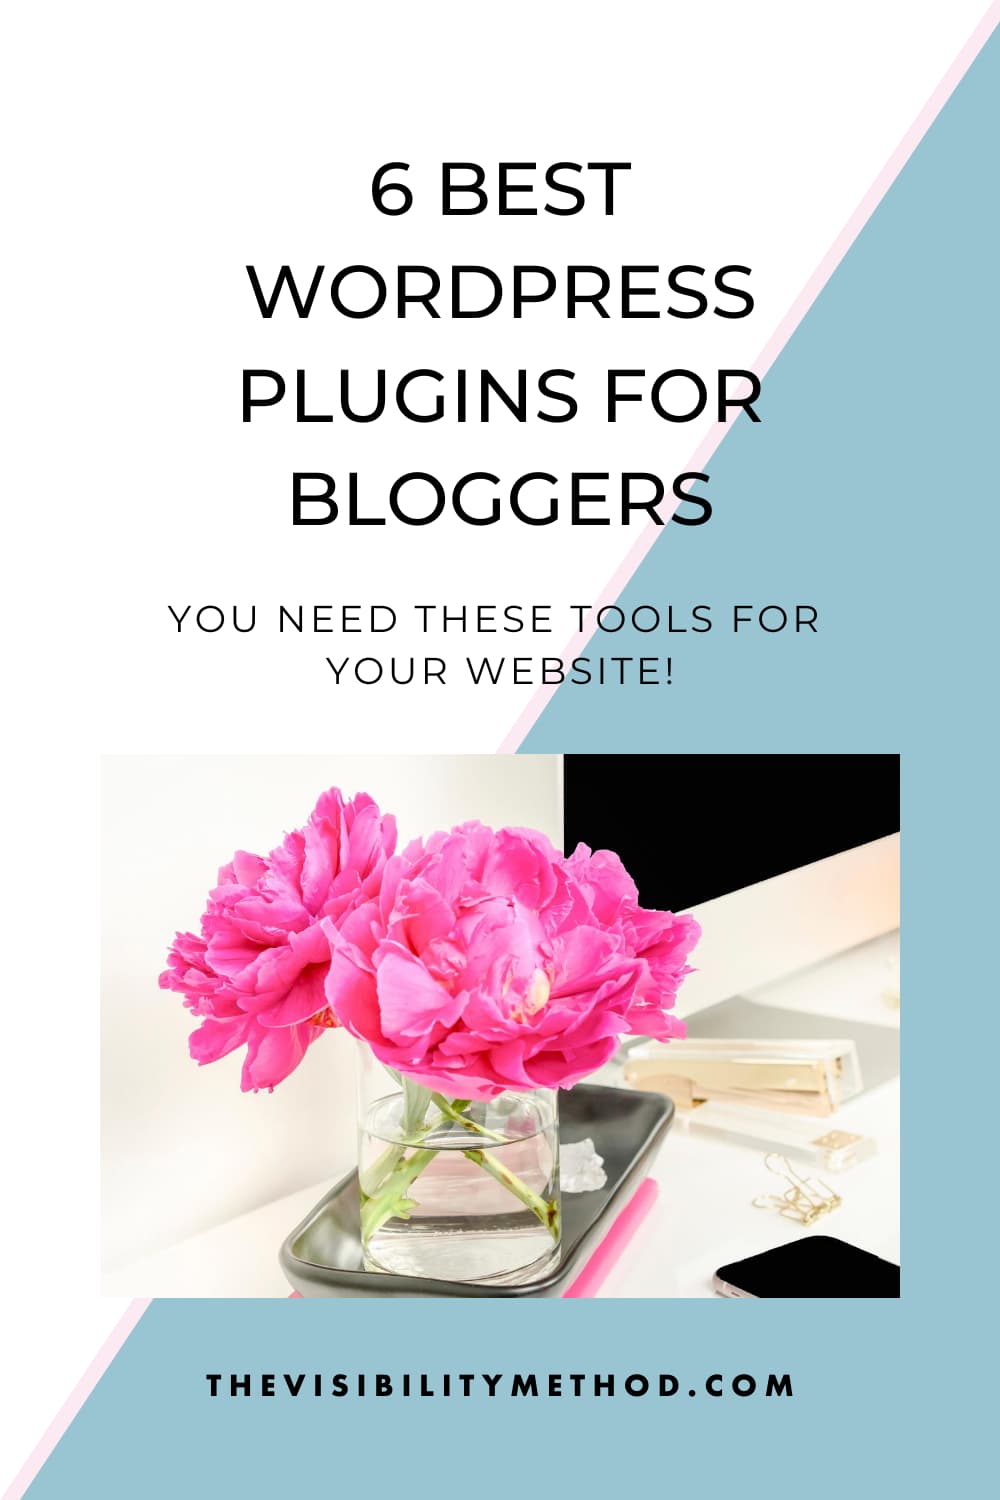 6 Best WordPress Plugins For Bloggers